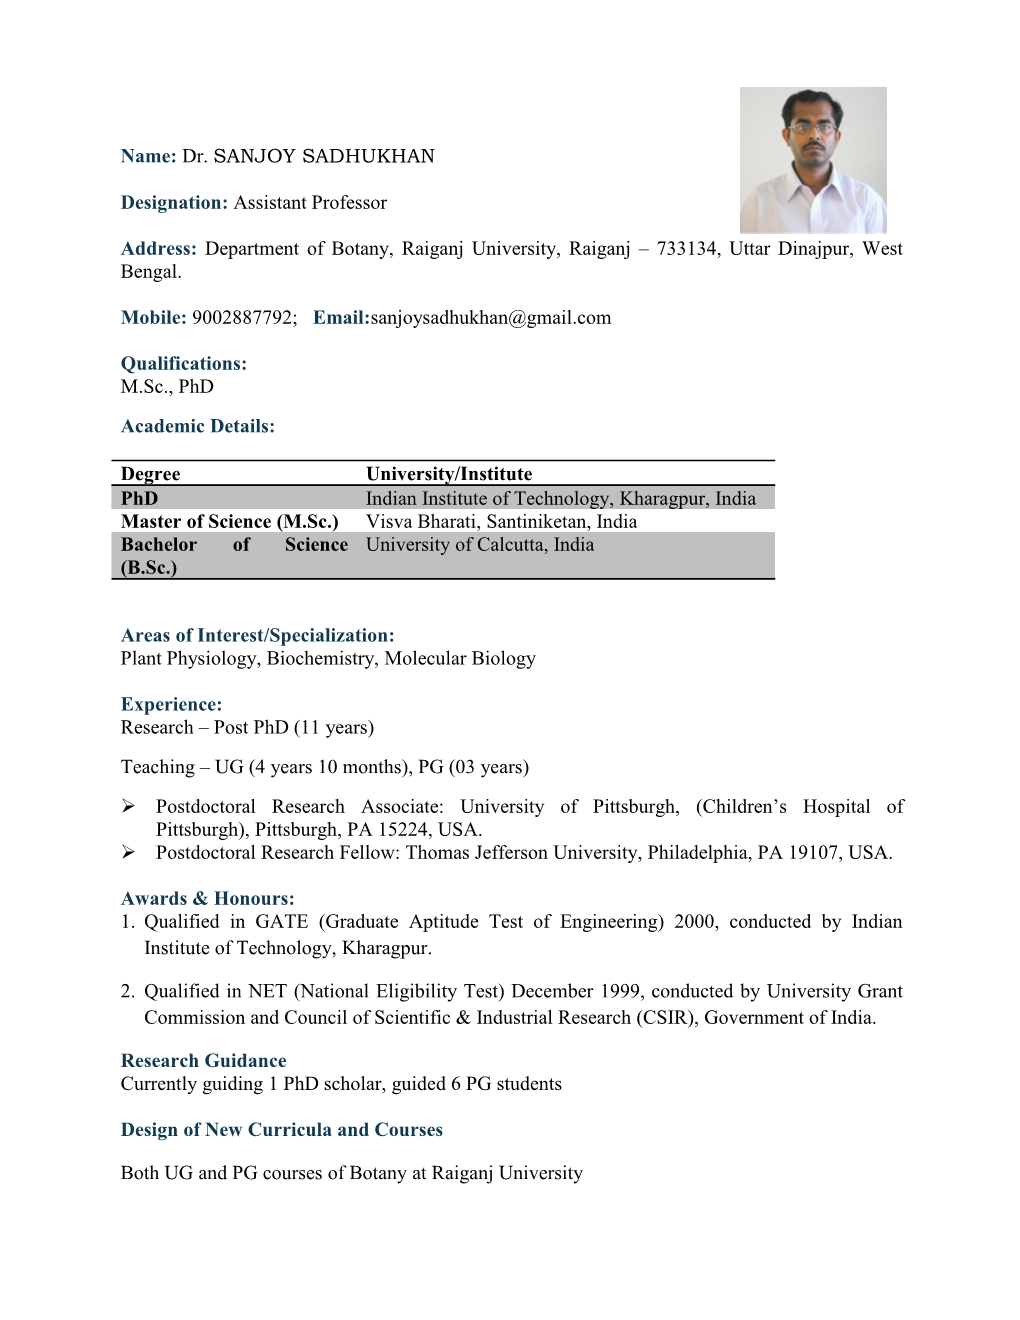 Name: Dr. SANJOY SADHUKHAN Designation: Assistant Professor Address: Department of Botany, Raiganj University, Raiganj – 73313